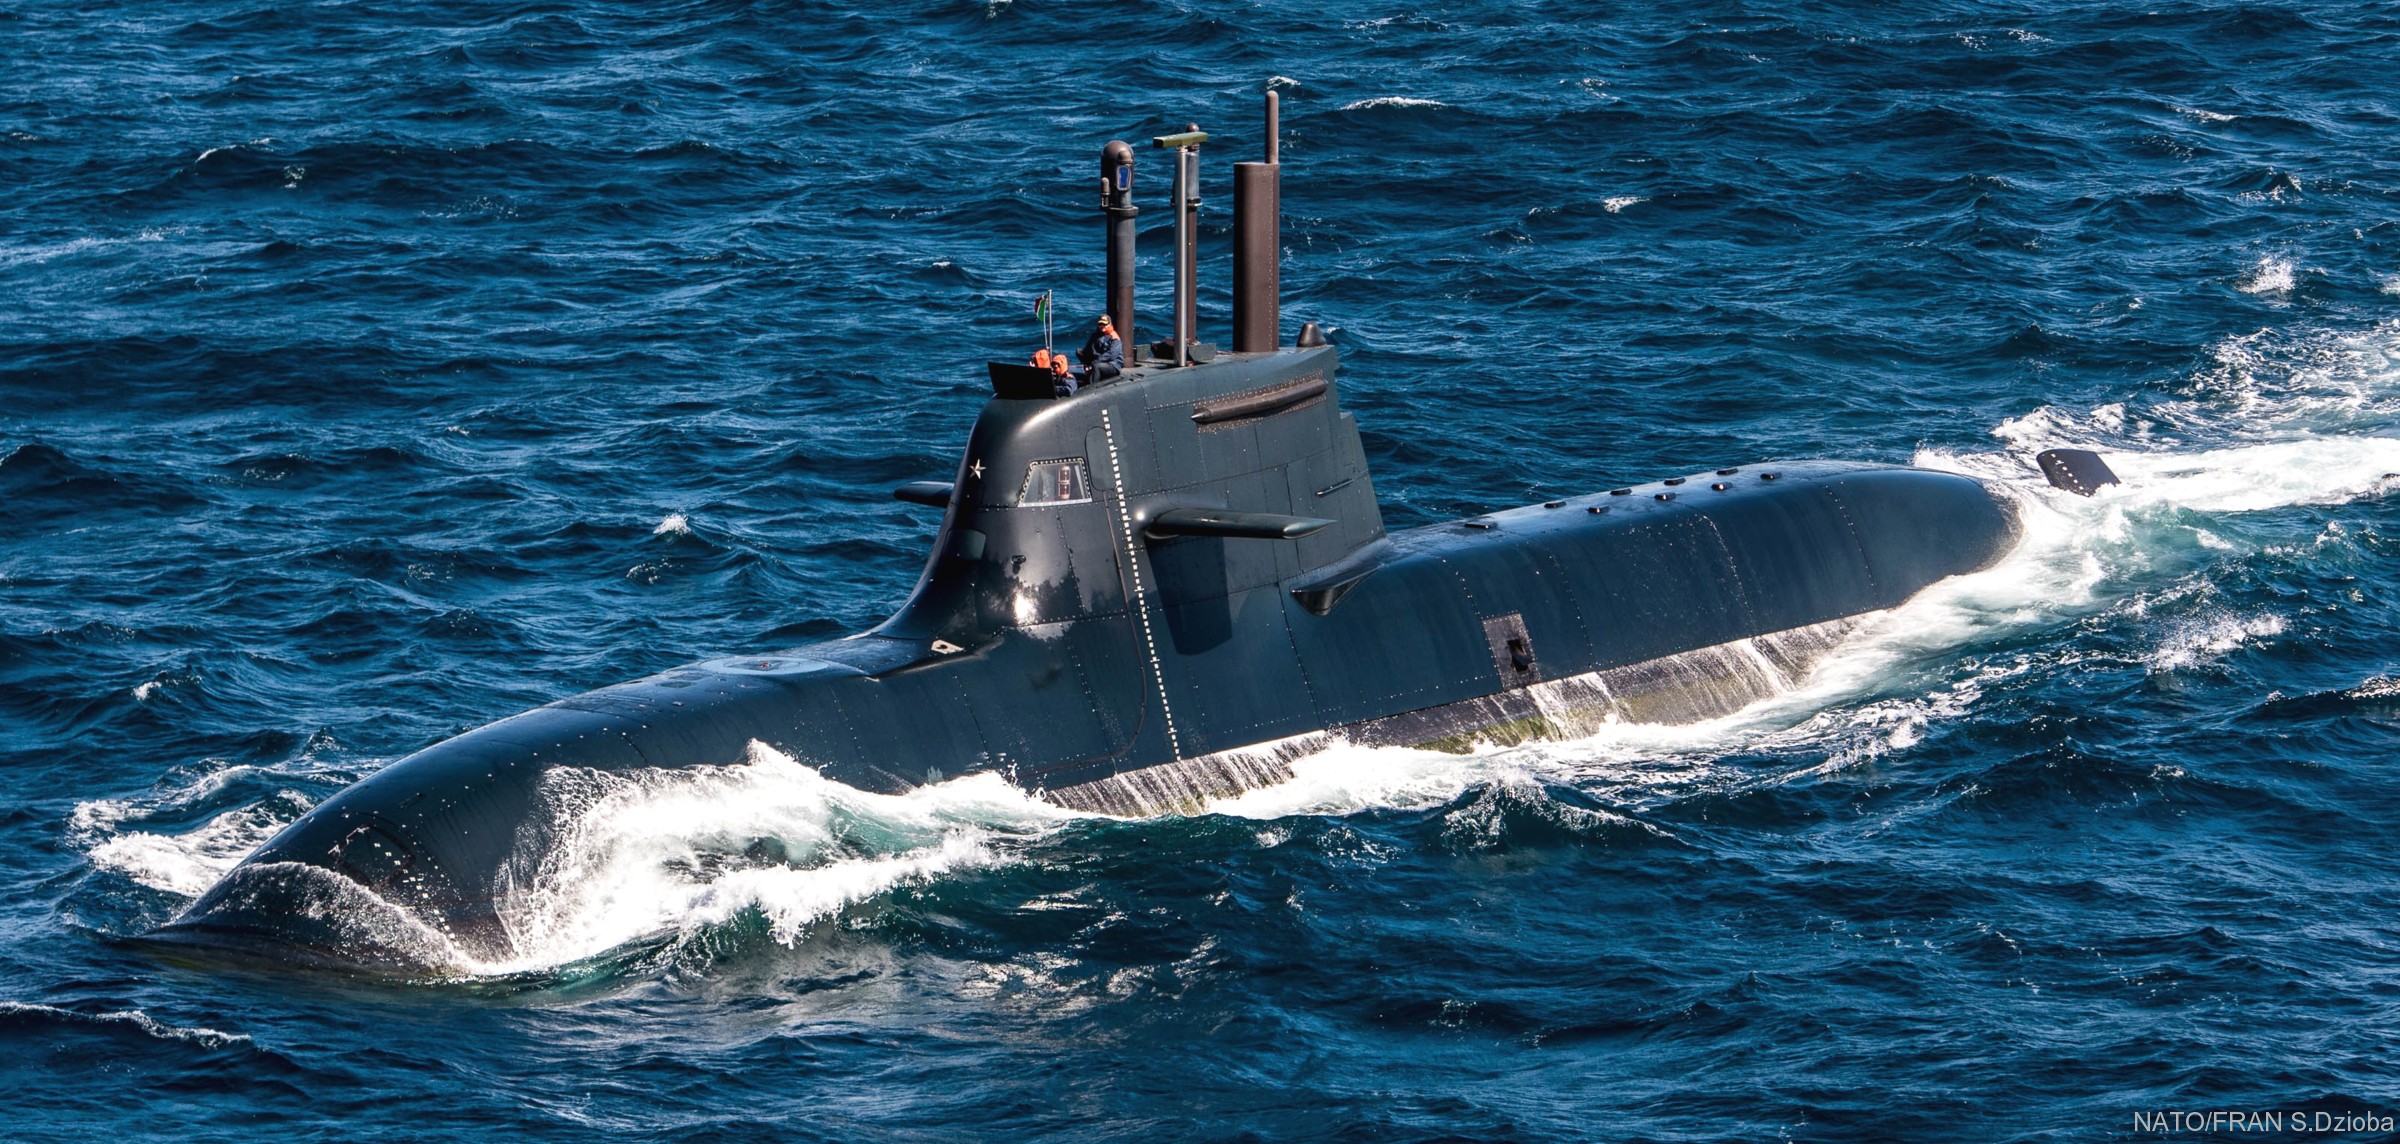 s-529 romeo romei todaro type 212 class submarine its smg italian navy marina militare 08